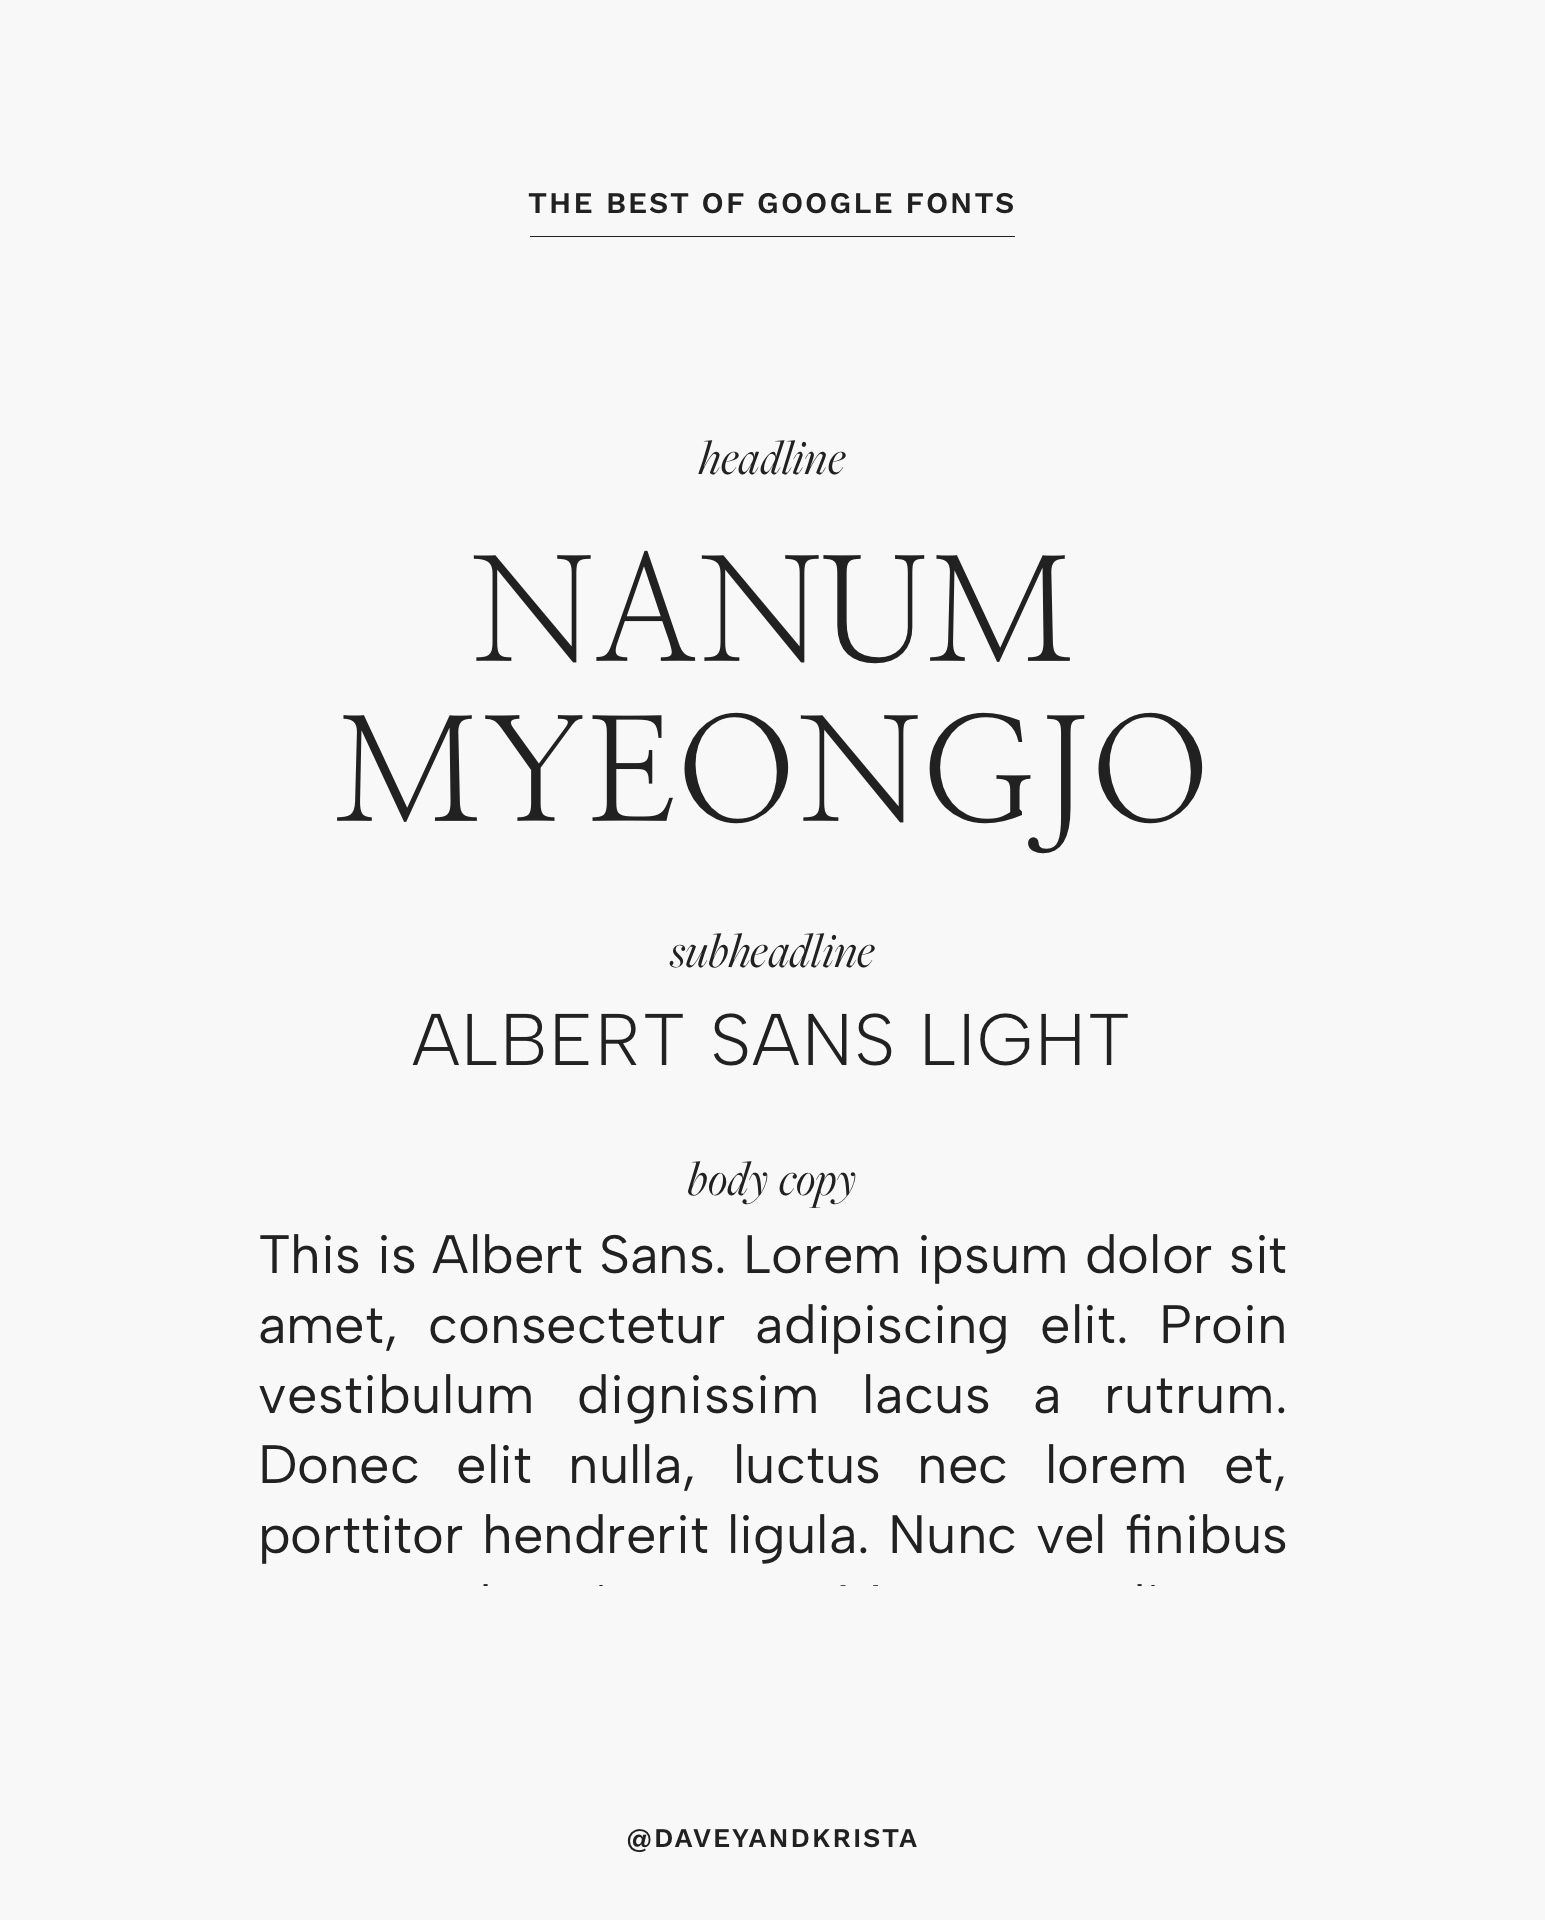 The best of Google Fonts: Nanum Myeongjo + Albert Sans Light
l | Via Davey & Krista
